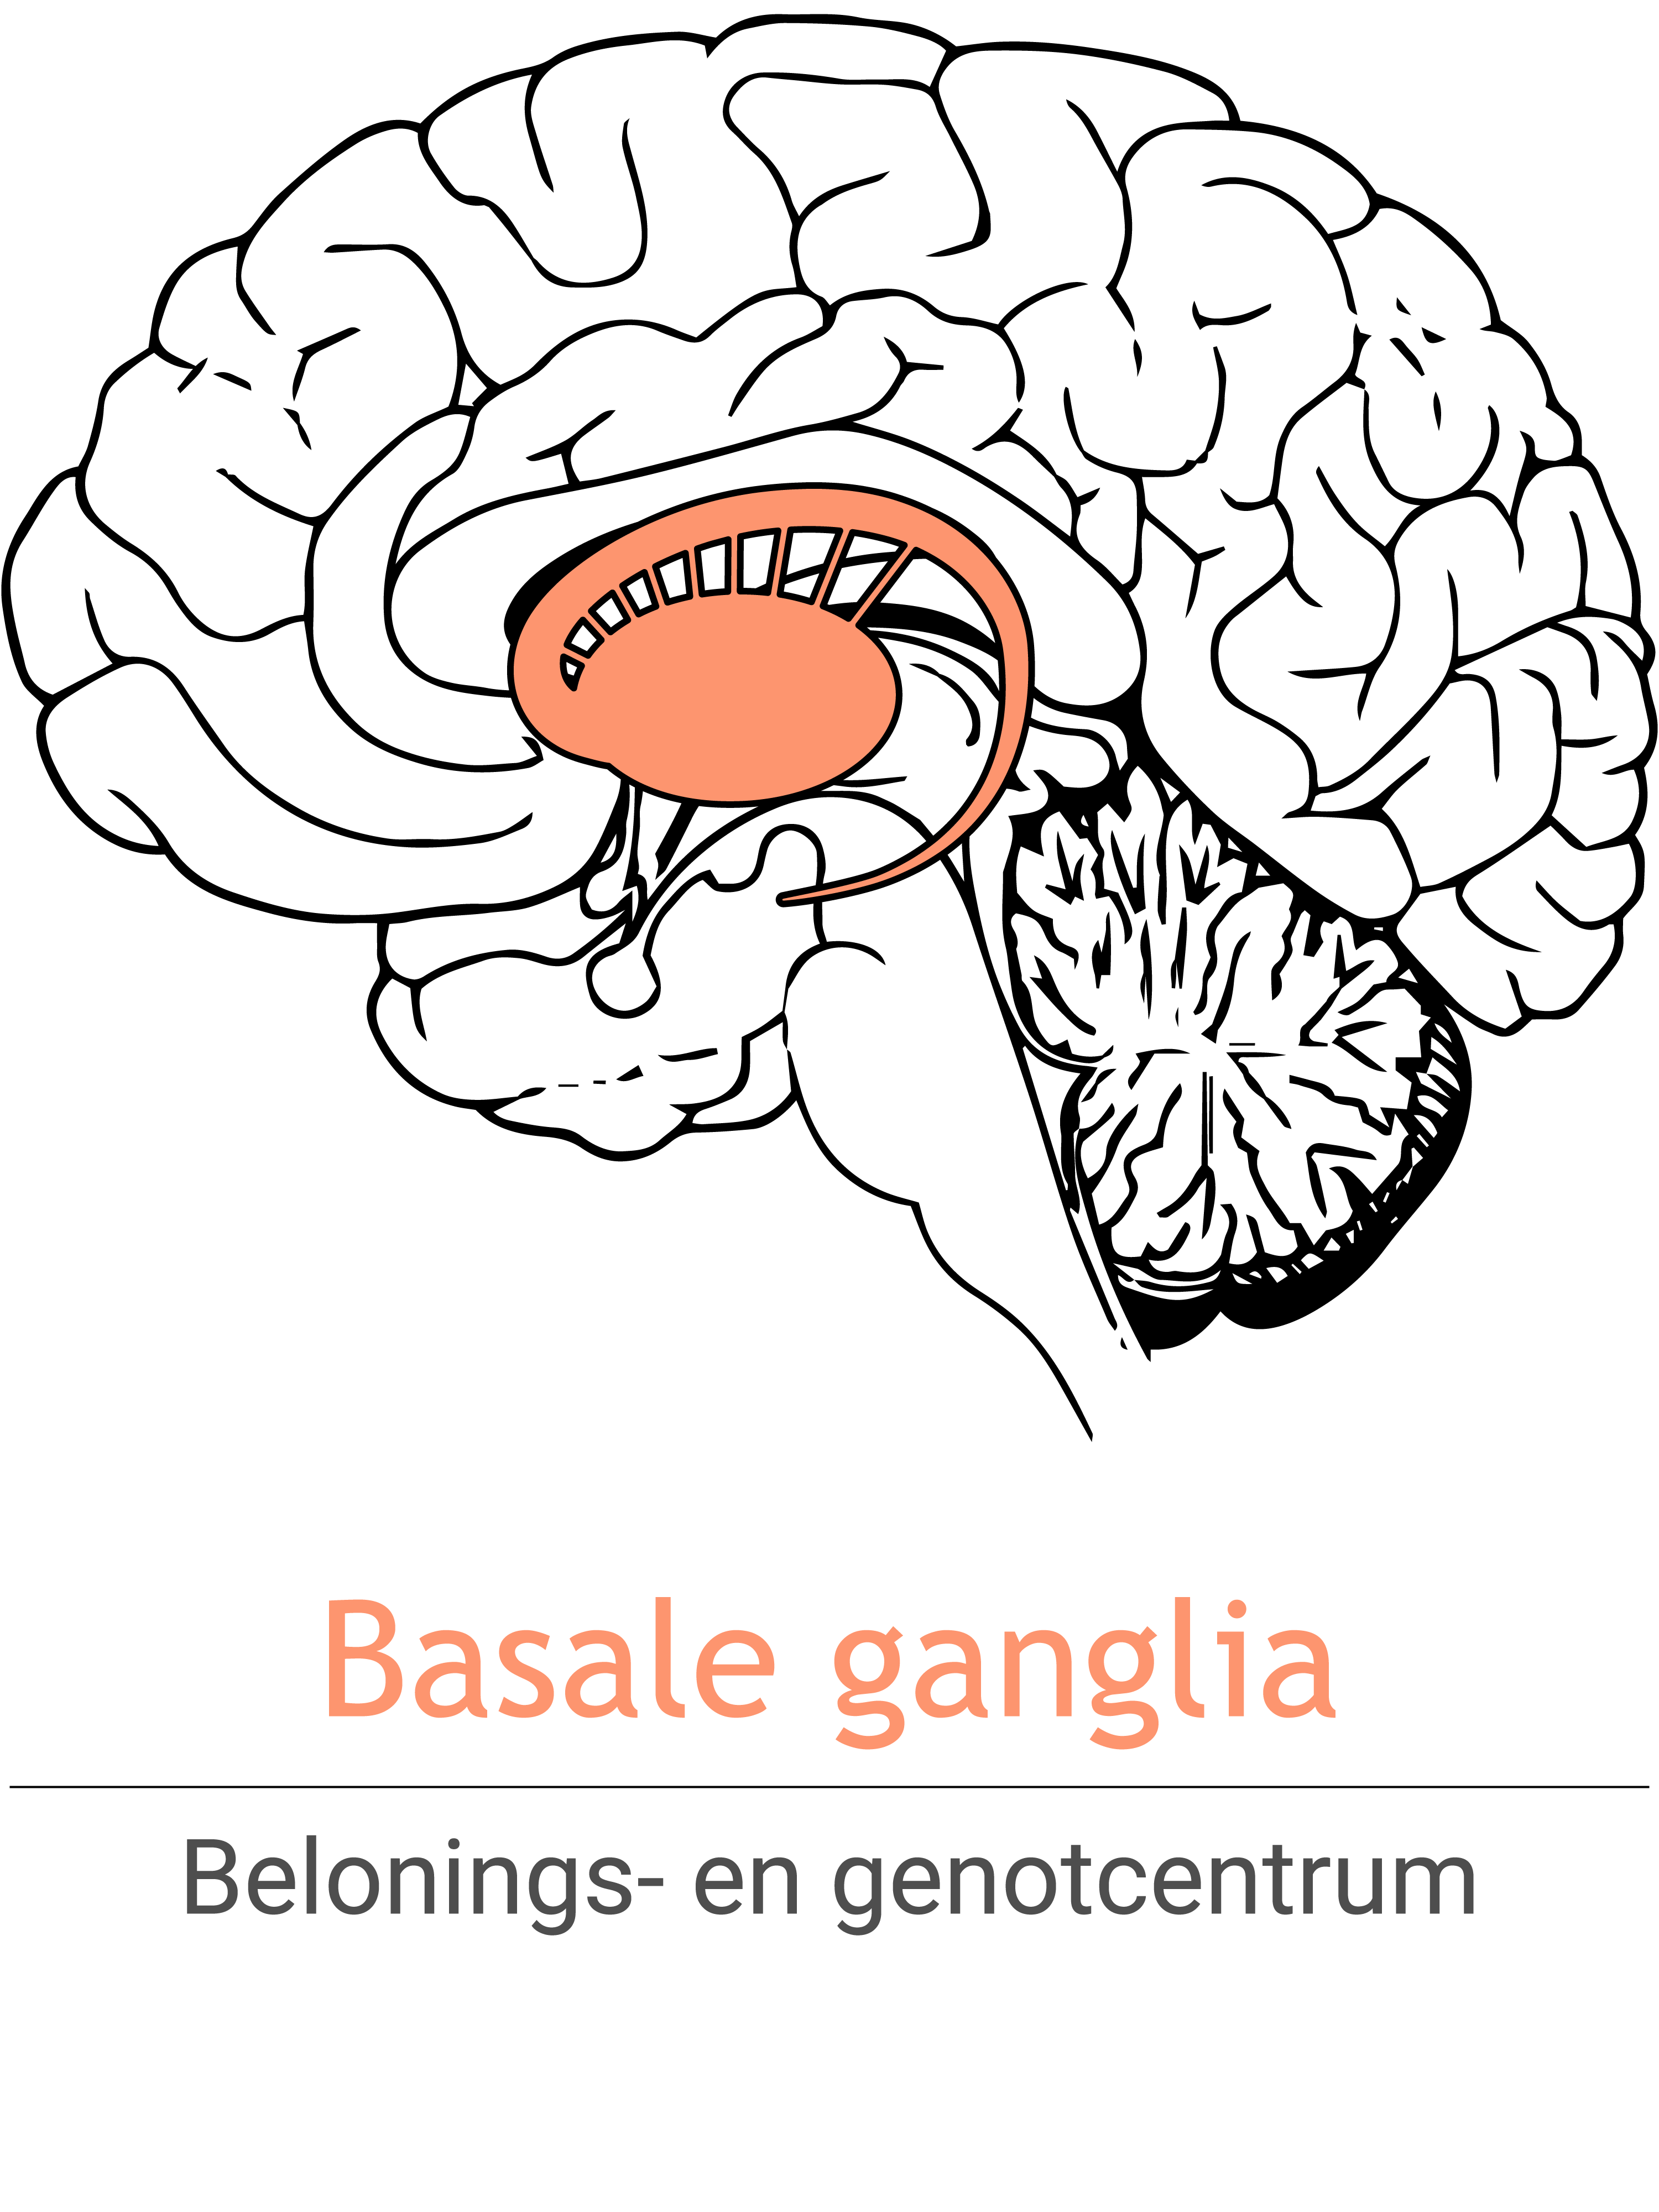 MSH_basalGanglia_NL